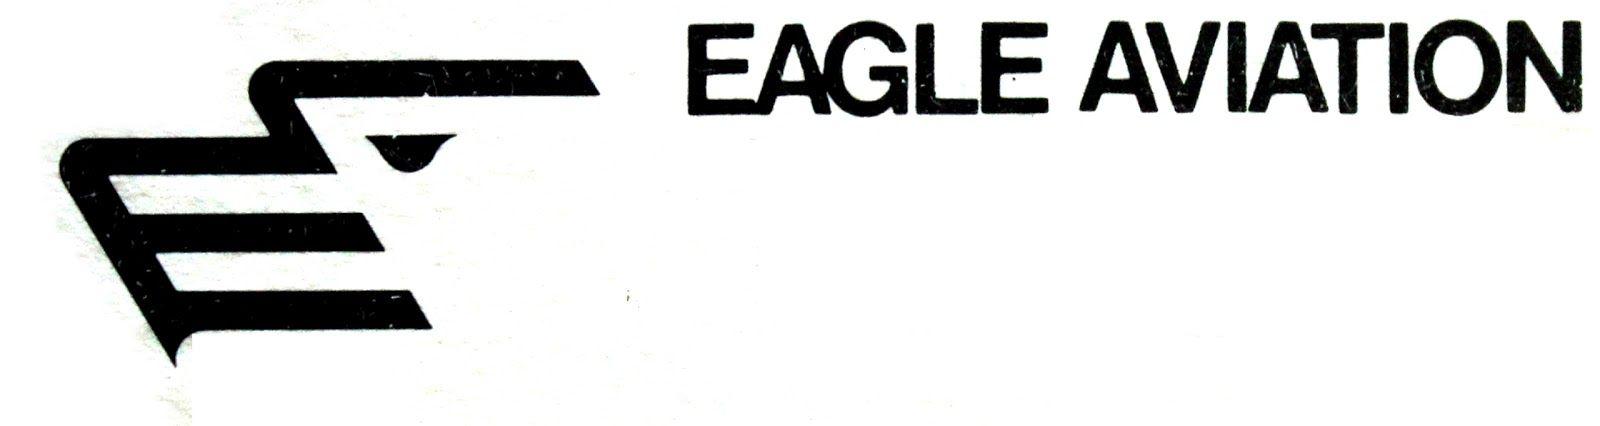 Eagle Aviation Logo - 3rd Level New Zealand: Eagle Airways - Part 1 - The Fledgling Eagle